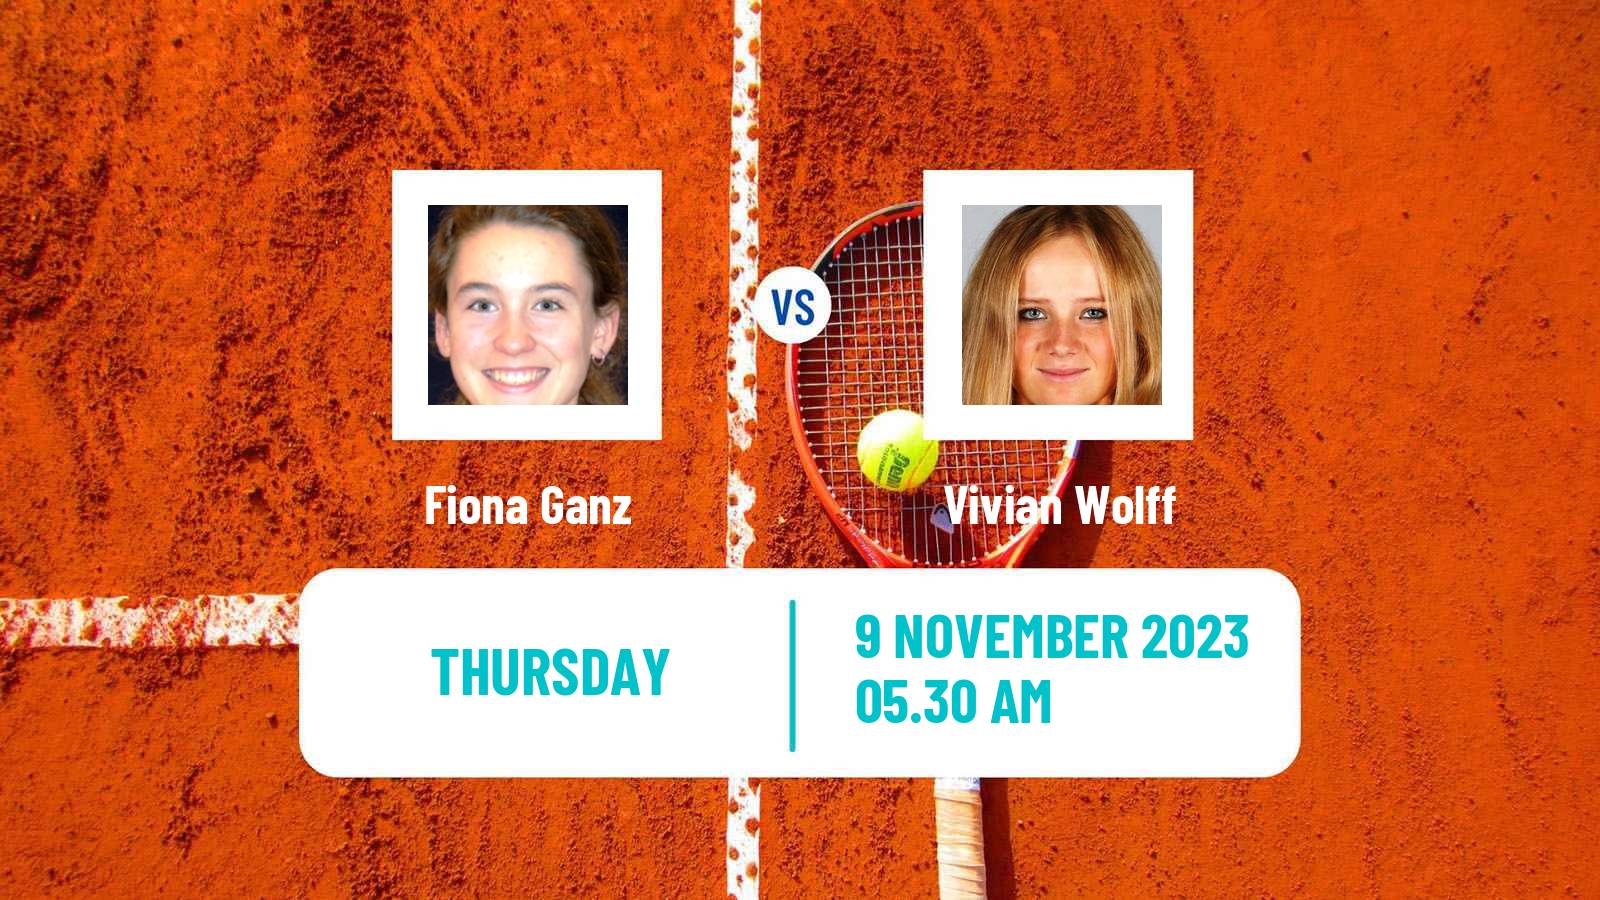 Tennis ITF W25 Solarino 2 Women Fiona Ganz - Vivian Wolff